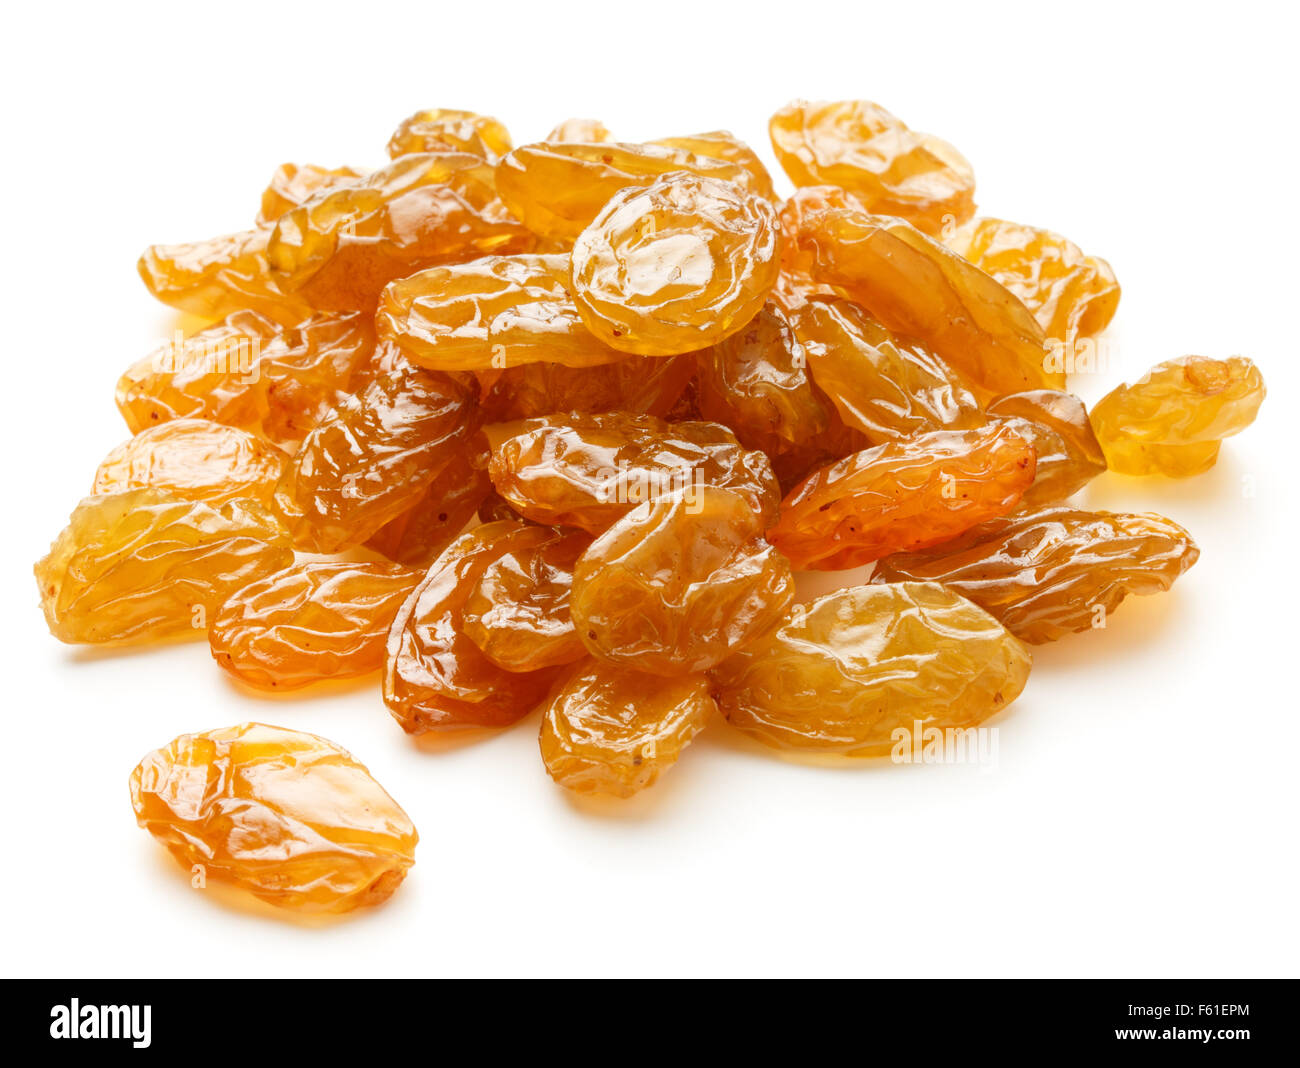 Yellow sultanas raisins isolated on white background cutout Stock Photo